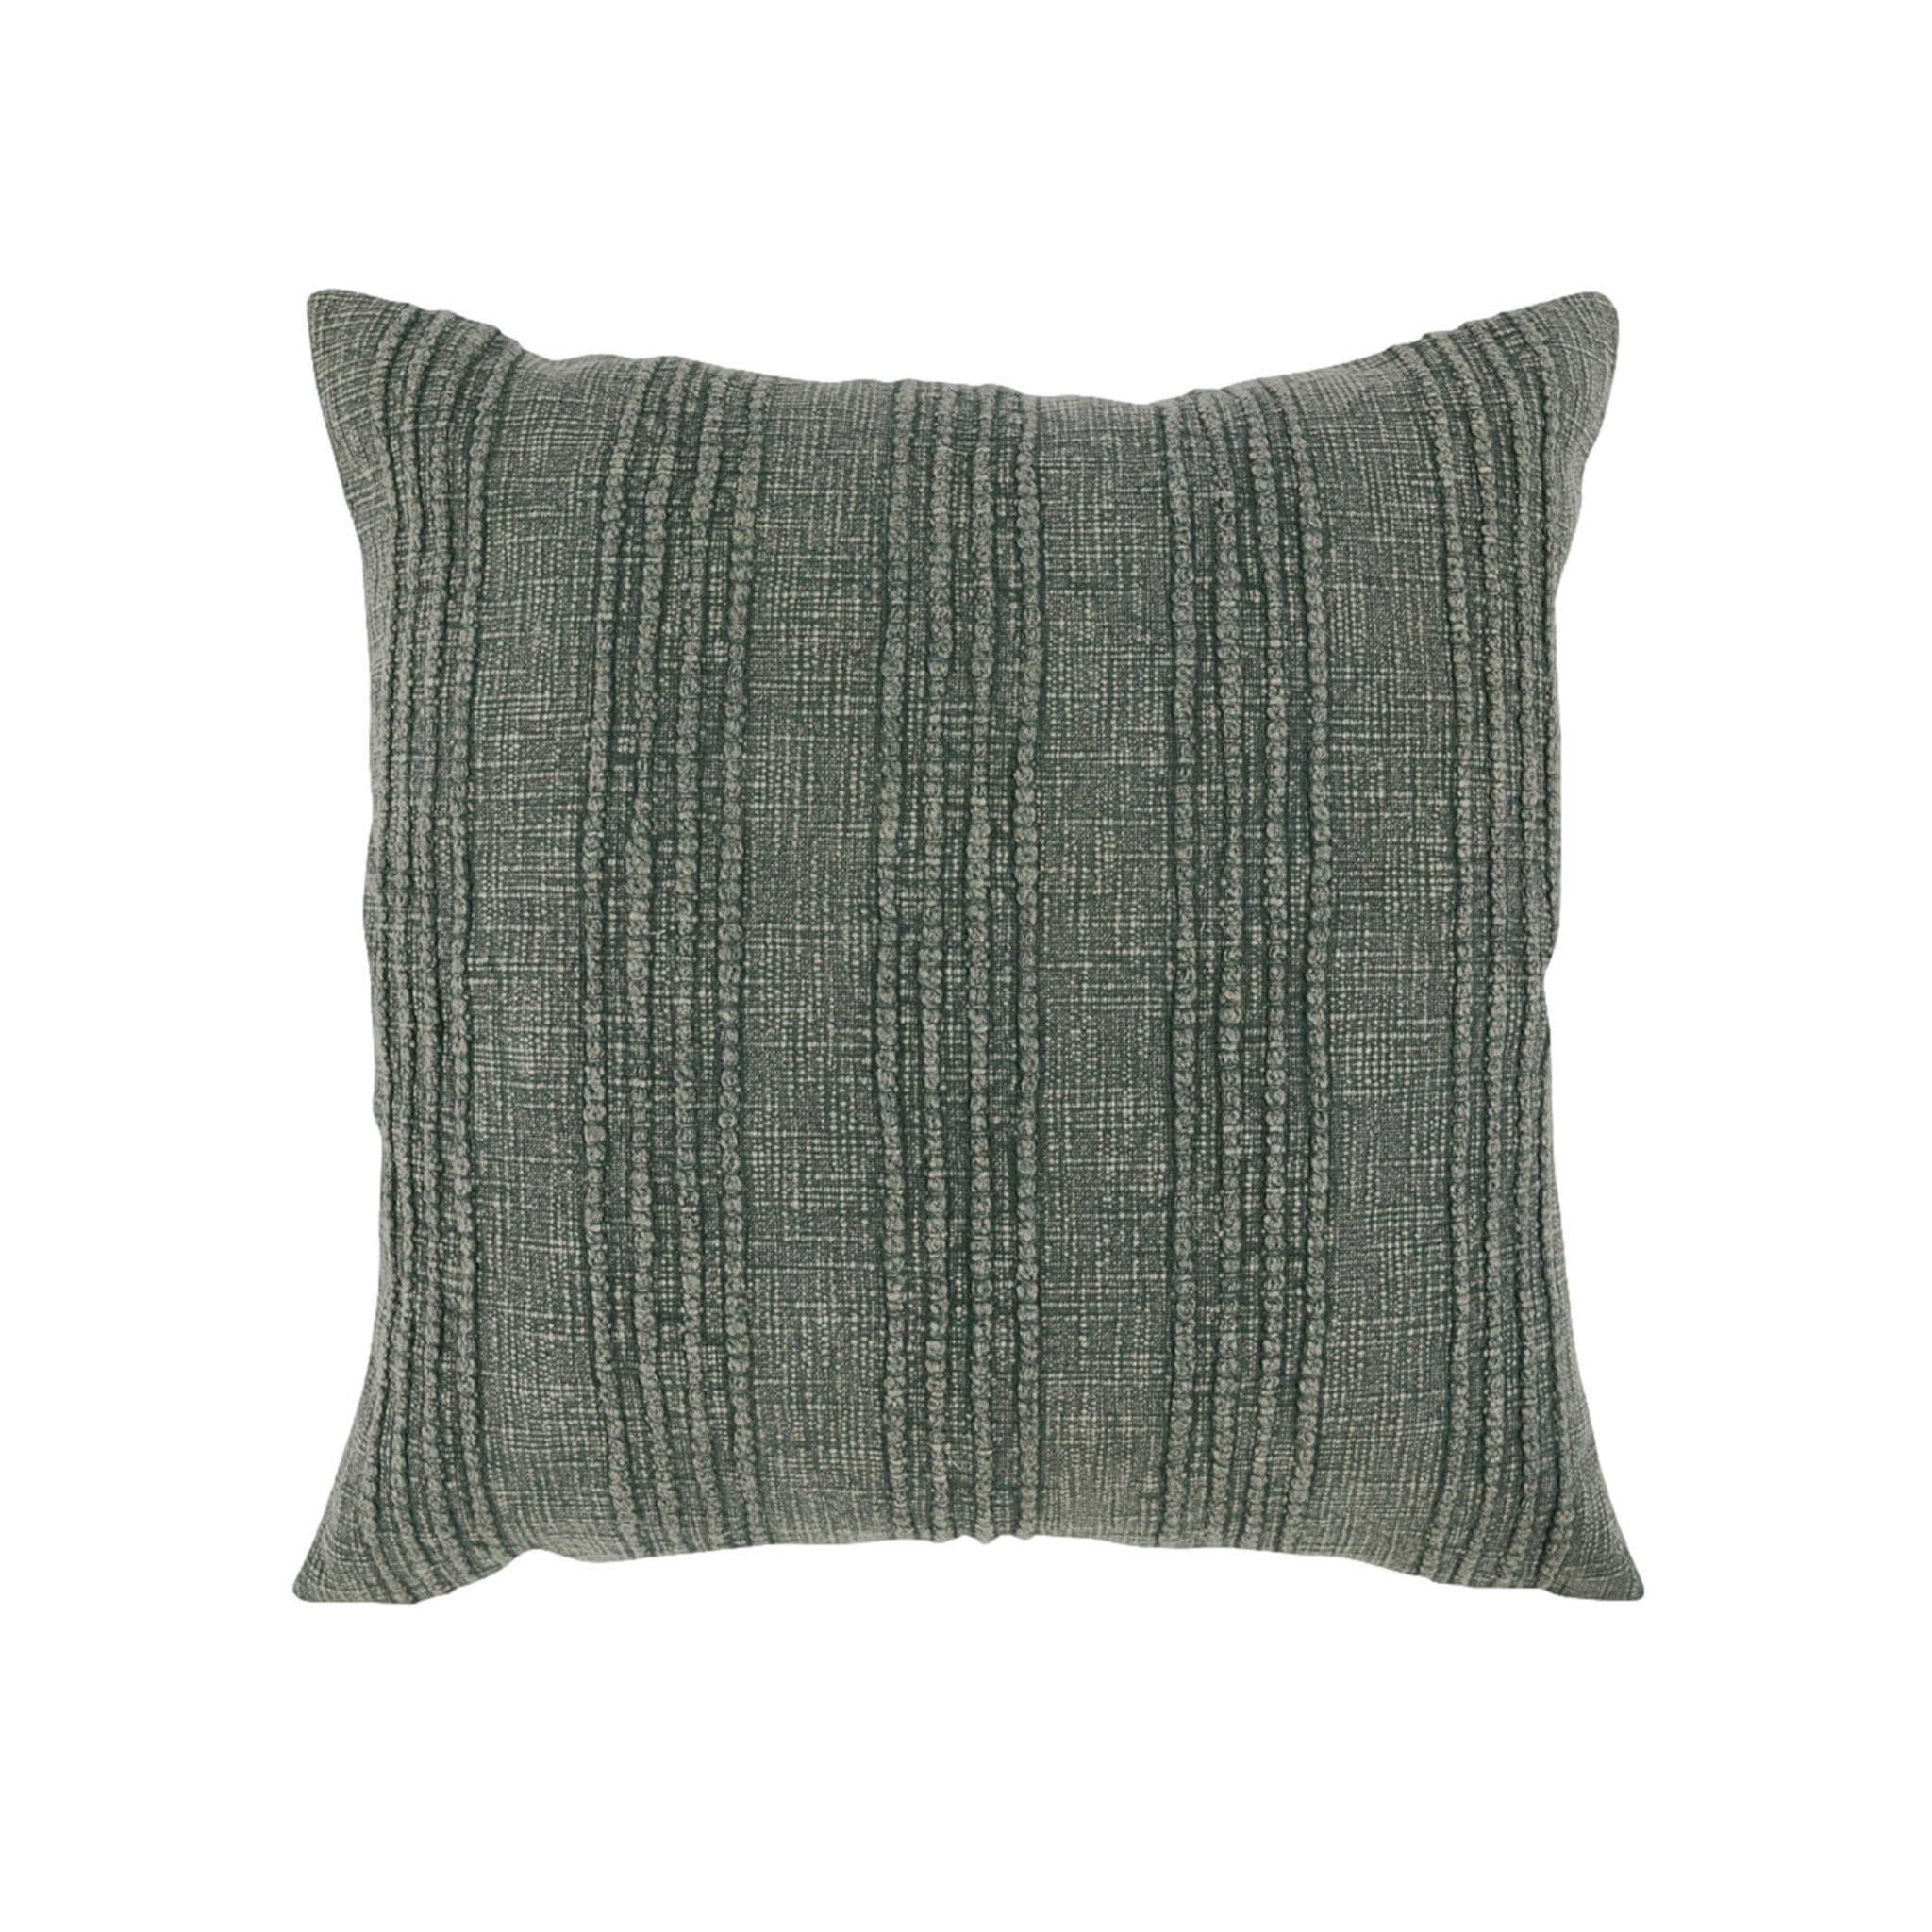 Gratitude Pillow (Green)